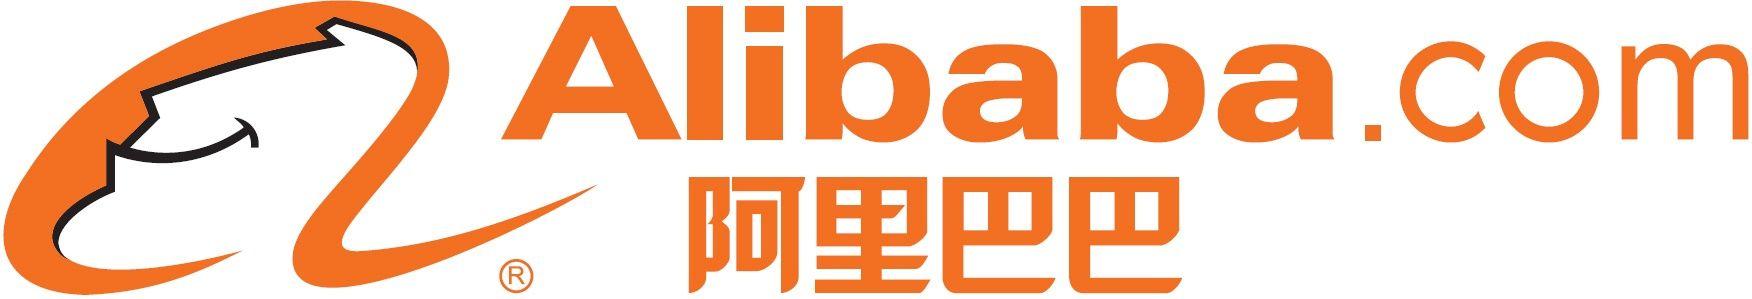 Alibaba.com Logo - Alibaba and Suning Commerce Enter Into Strategic Alliance. Business